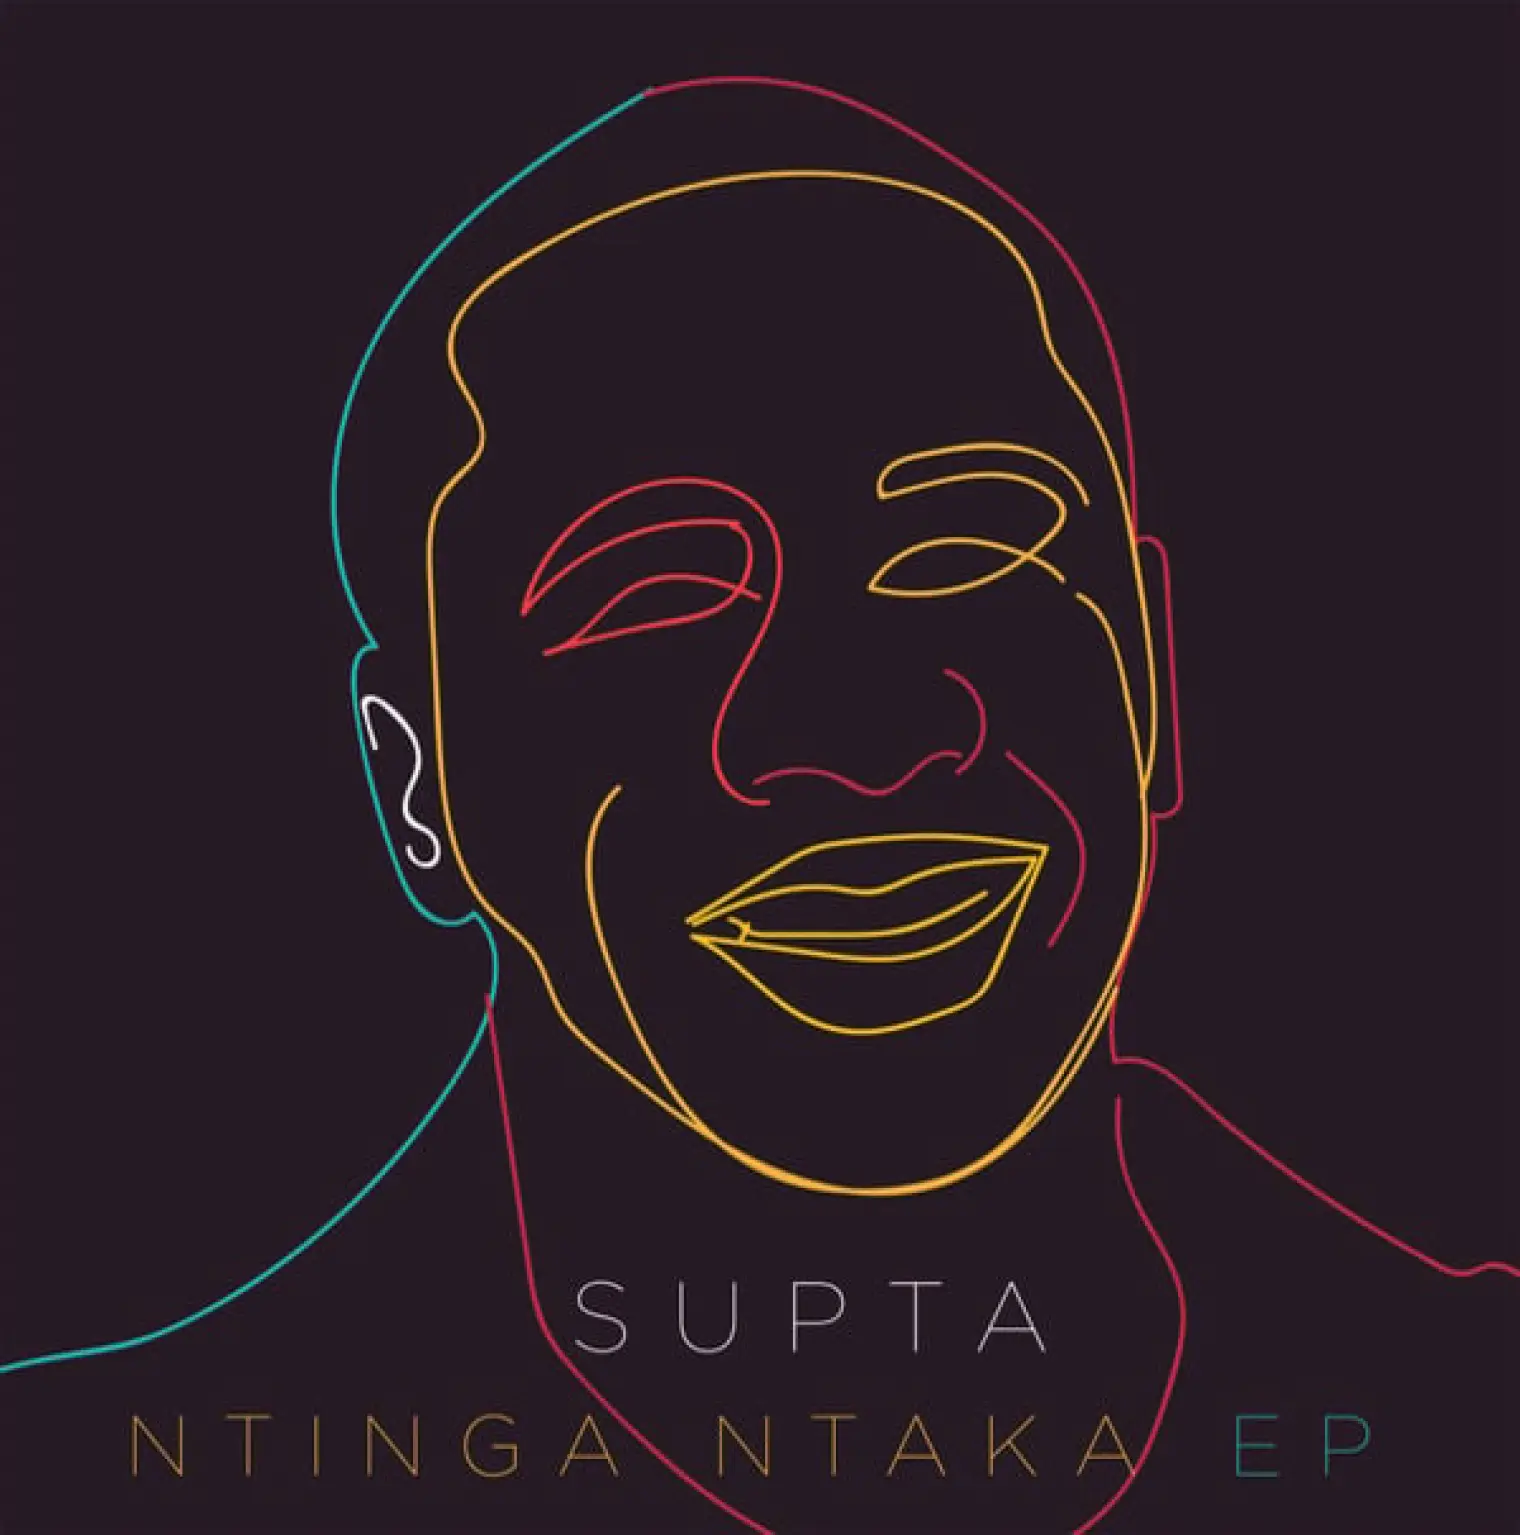 Ntinga Ntaka -  Supta 